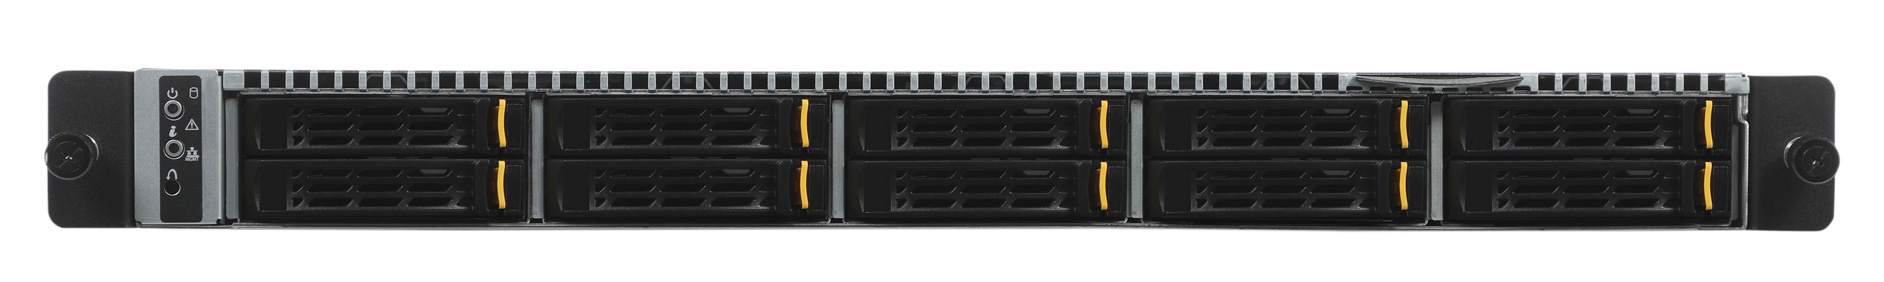 Сервер iRU Rock c1210P, 2xIntel Xeon Gold 6230, 4x64Gb RAM, 2x500Gb SATA SSD, 10x2.5